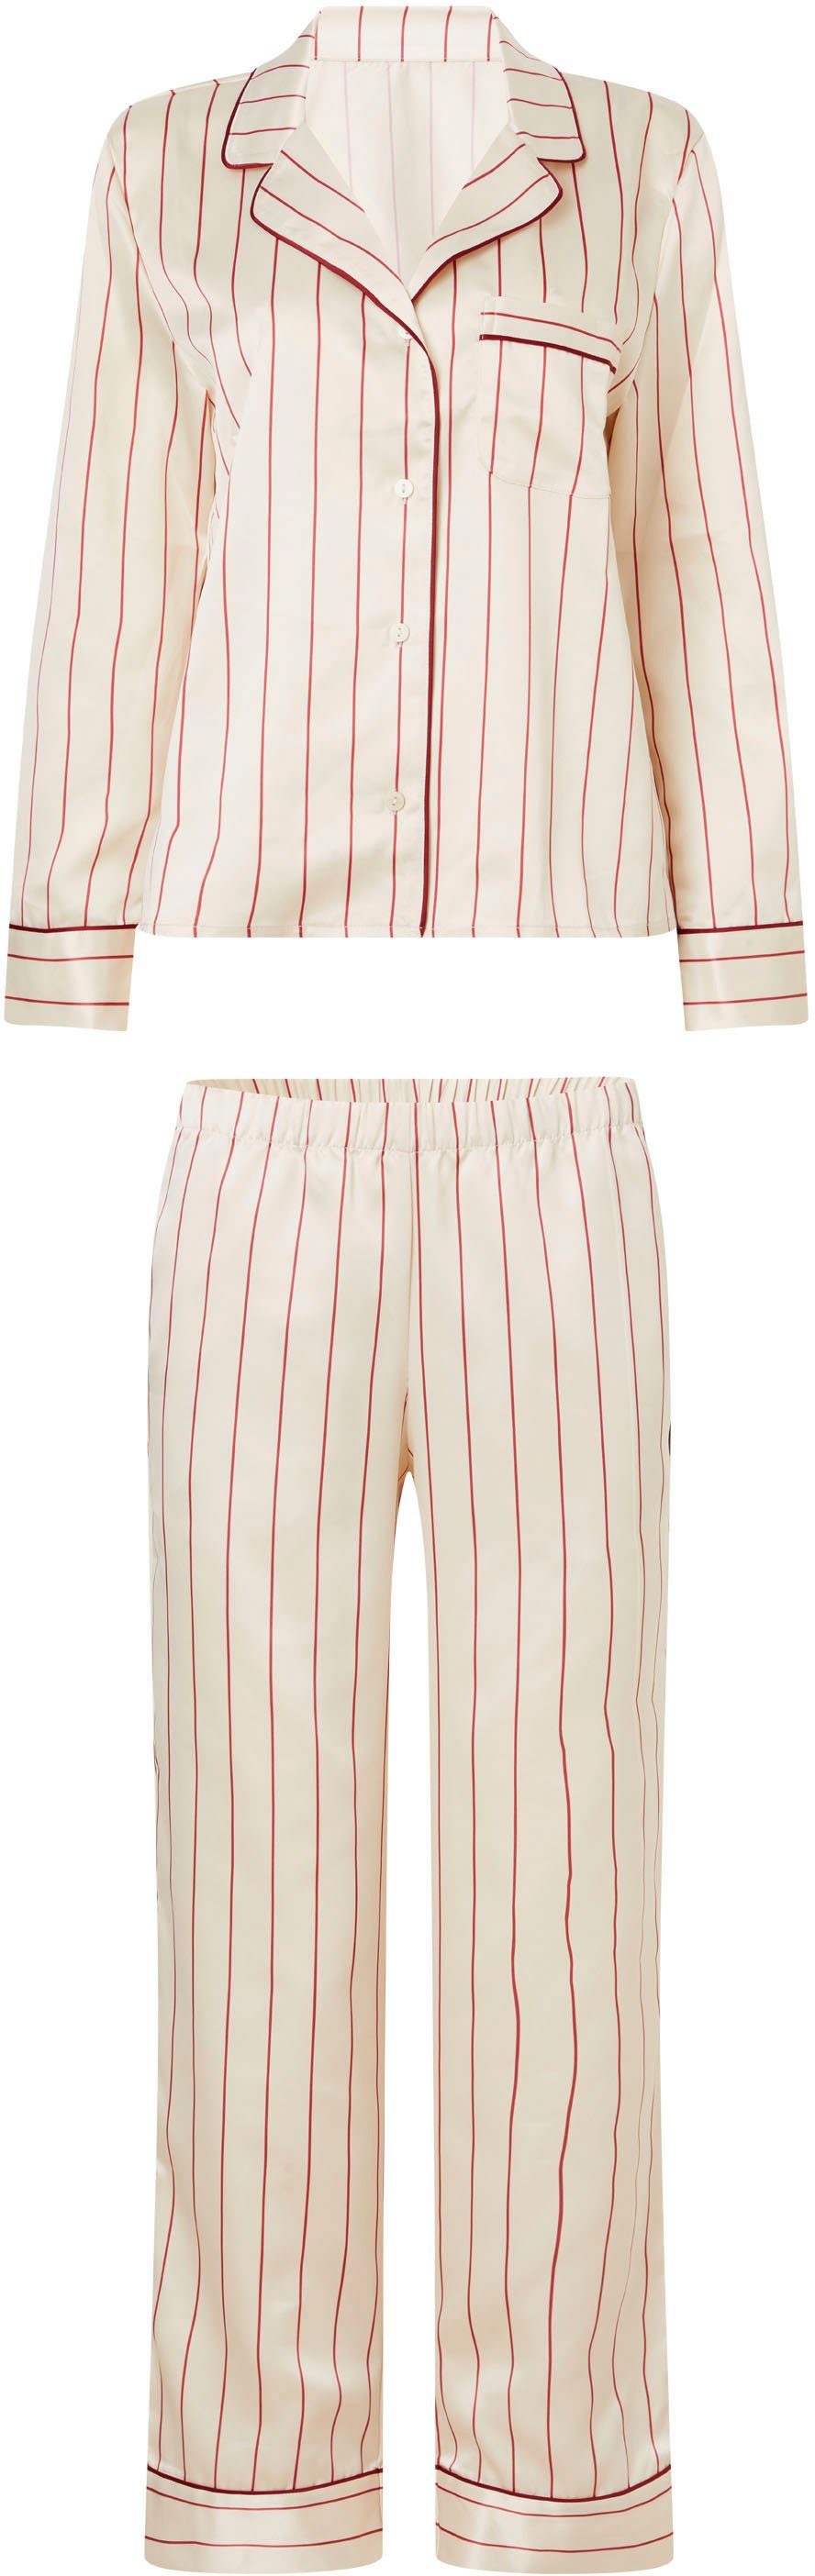 Calvin Klein Underwear PANT Set Stück) 3 Pyjama (Set, Pyjama Schlafmaske SET & L/S im